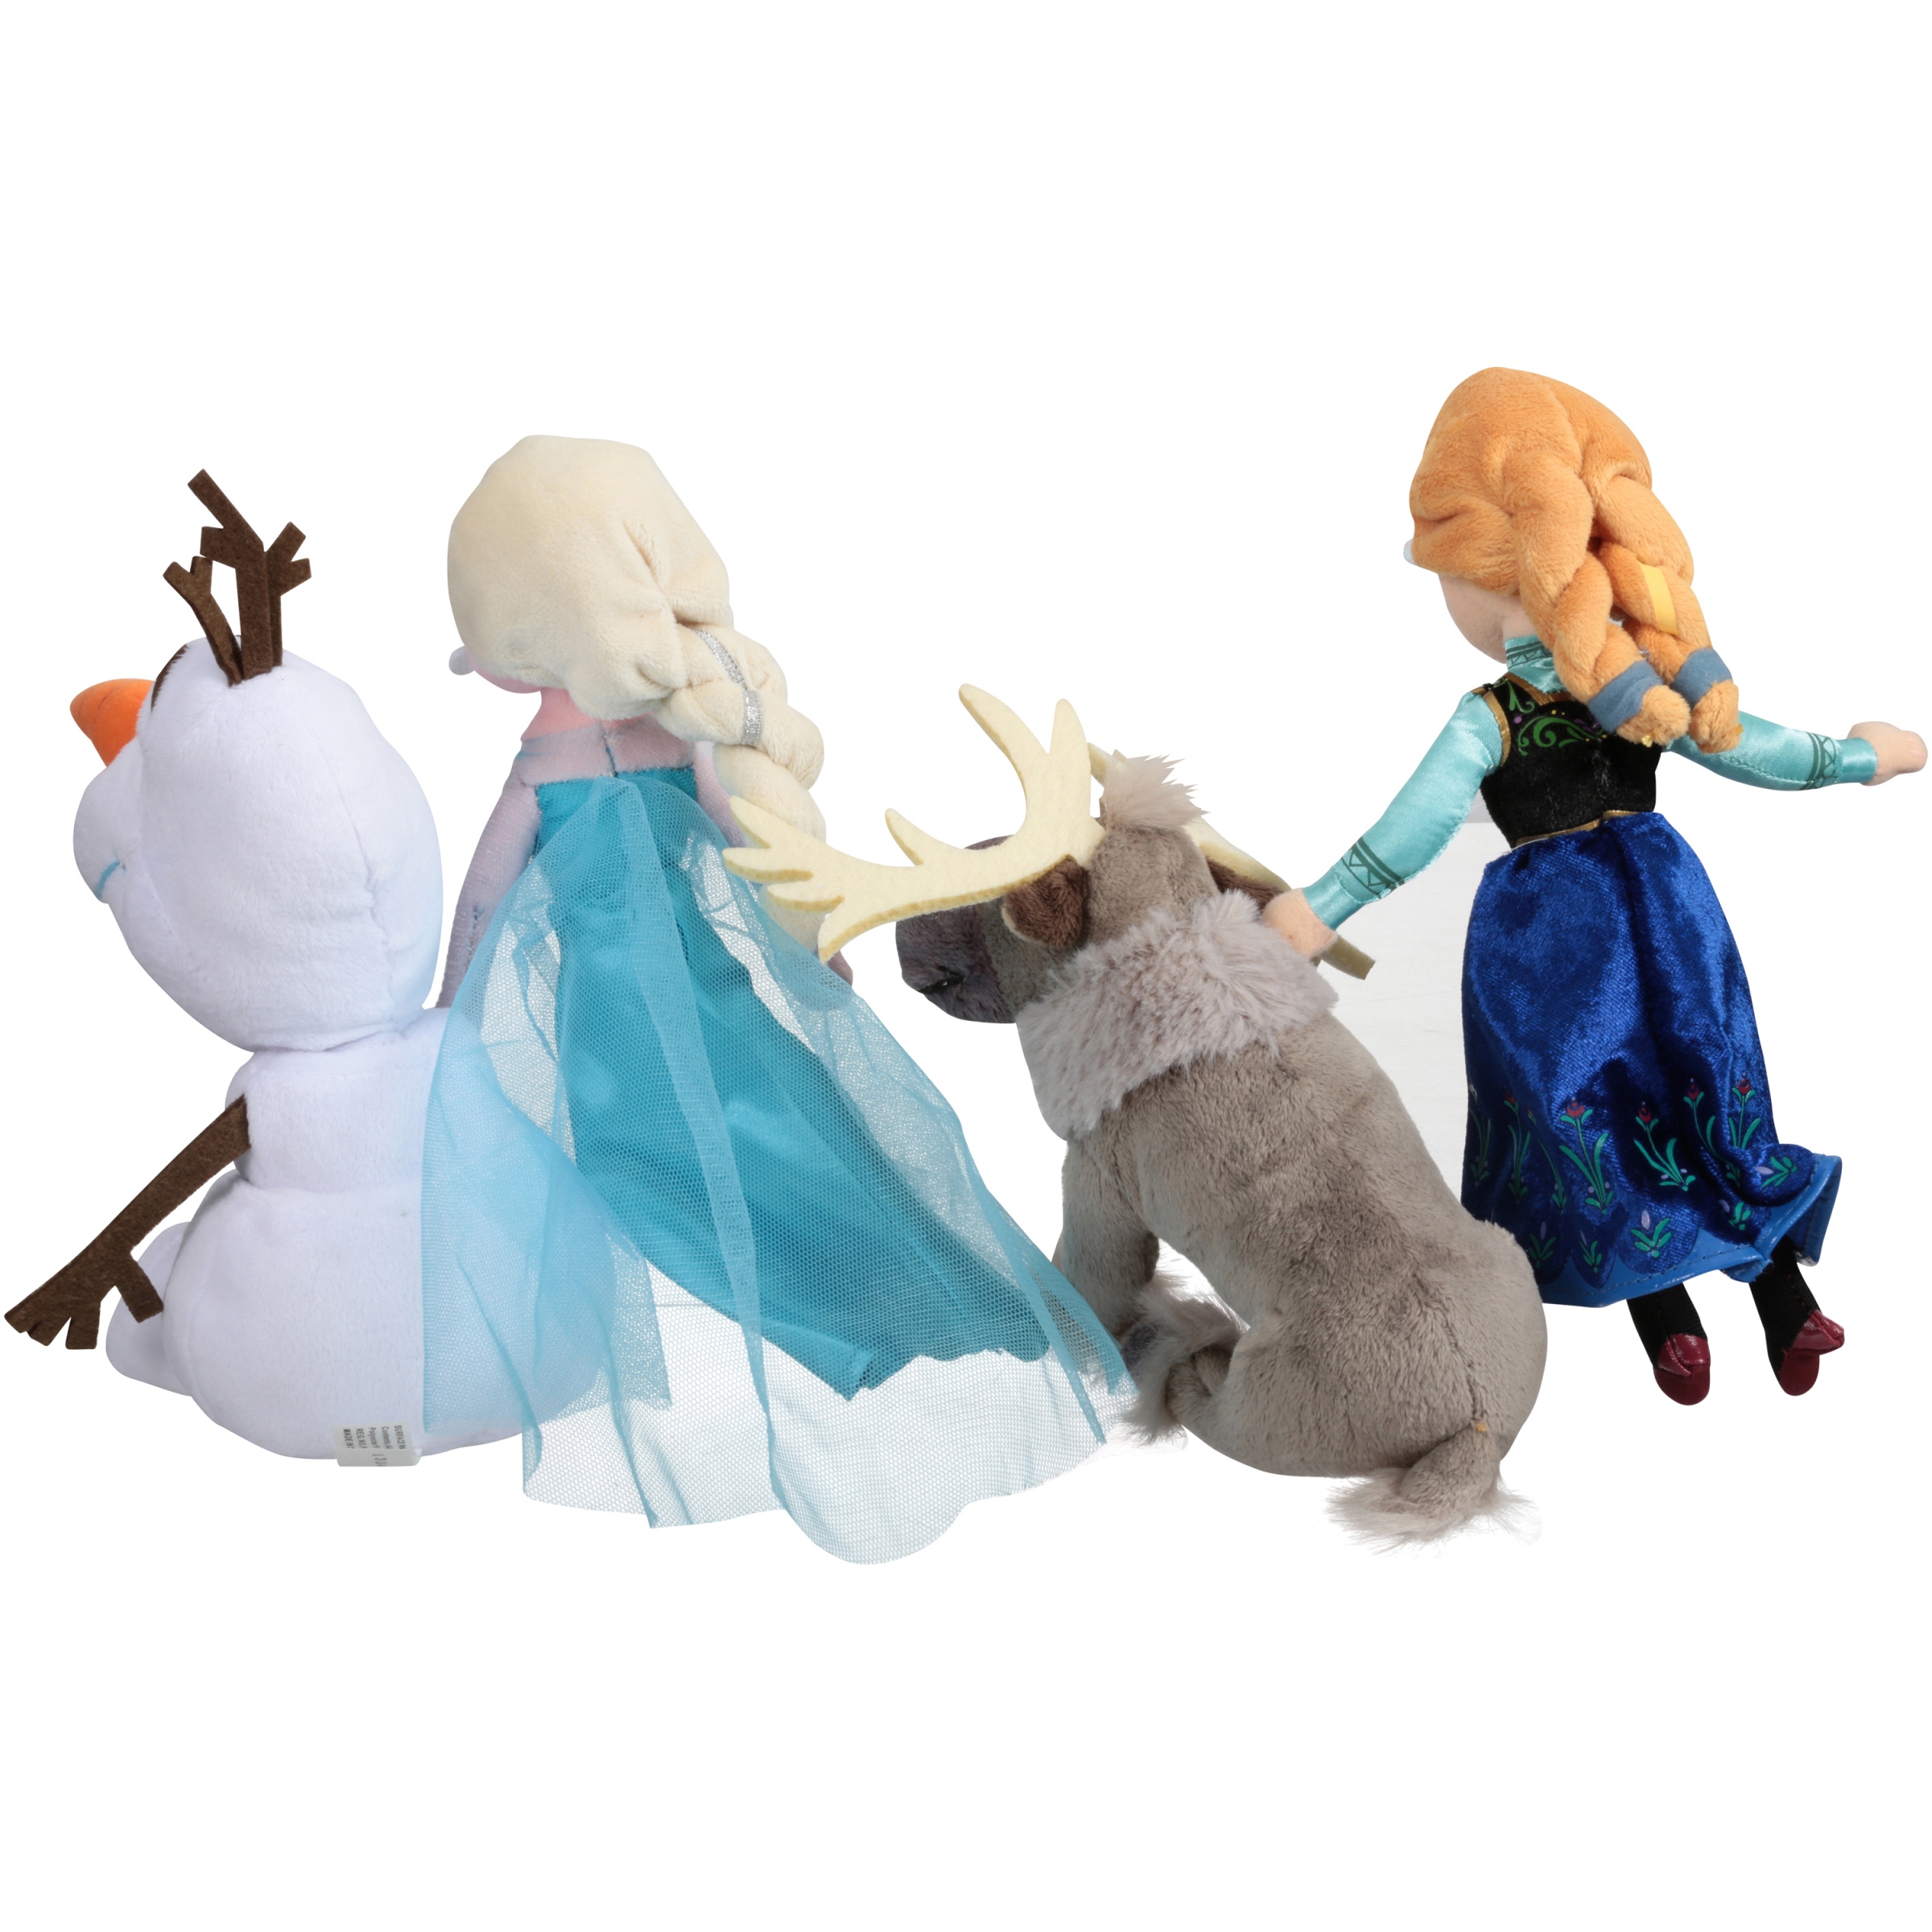 Disney Frozen Talking Plush Bean Elsa/Anna/Olaf/Sven Dolls 4 ct Box - image 2 of 2